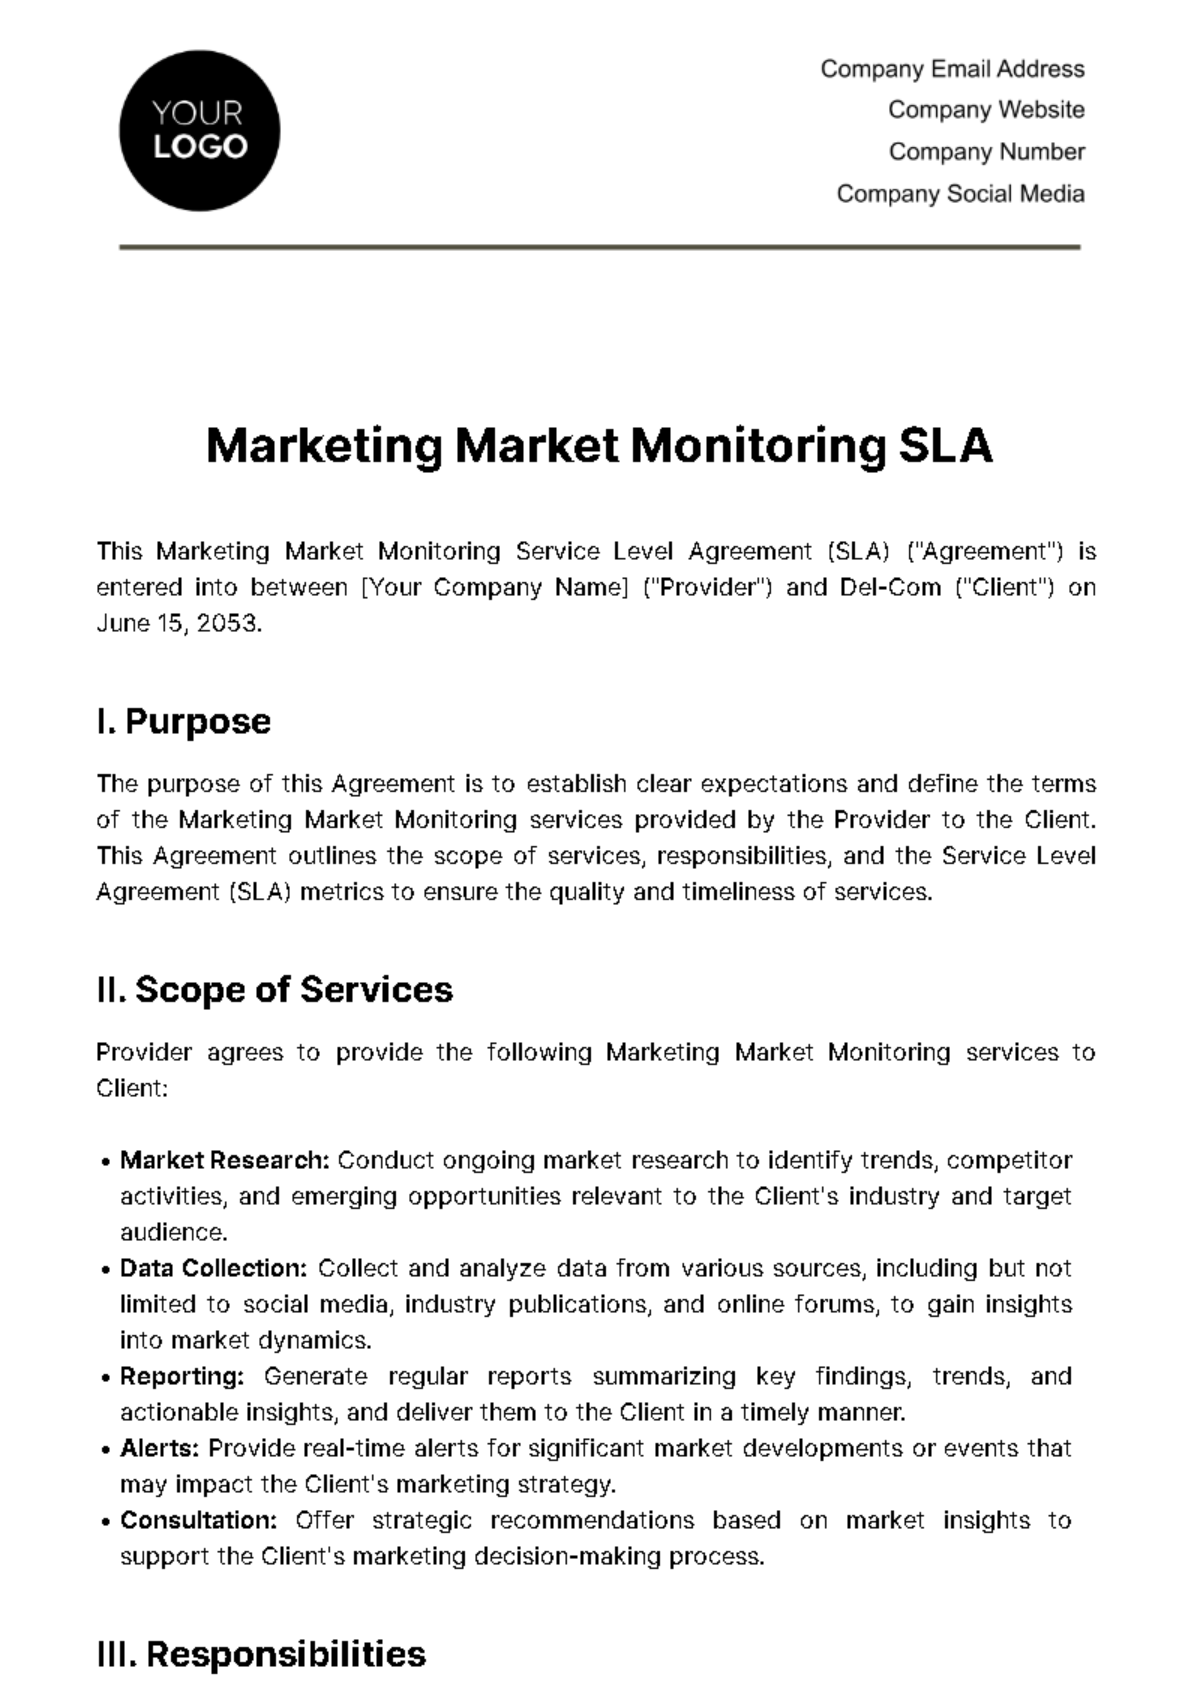 Marketing Market Monitoring SLA Template